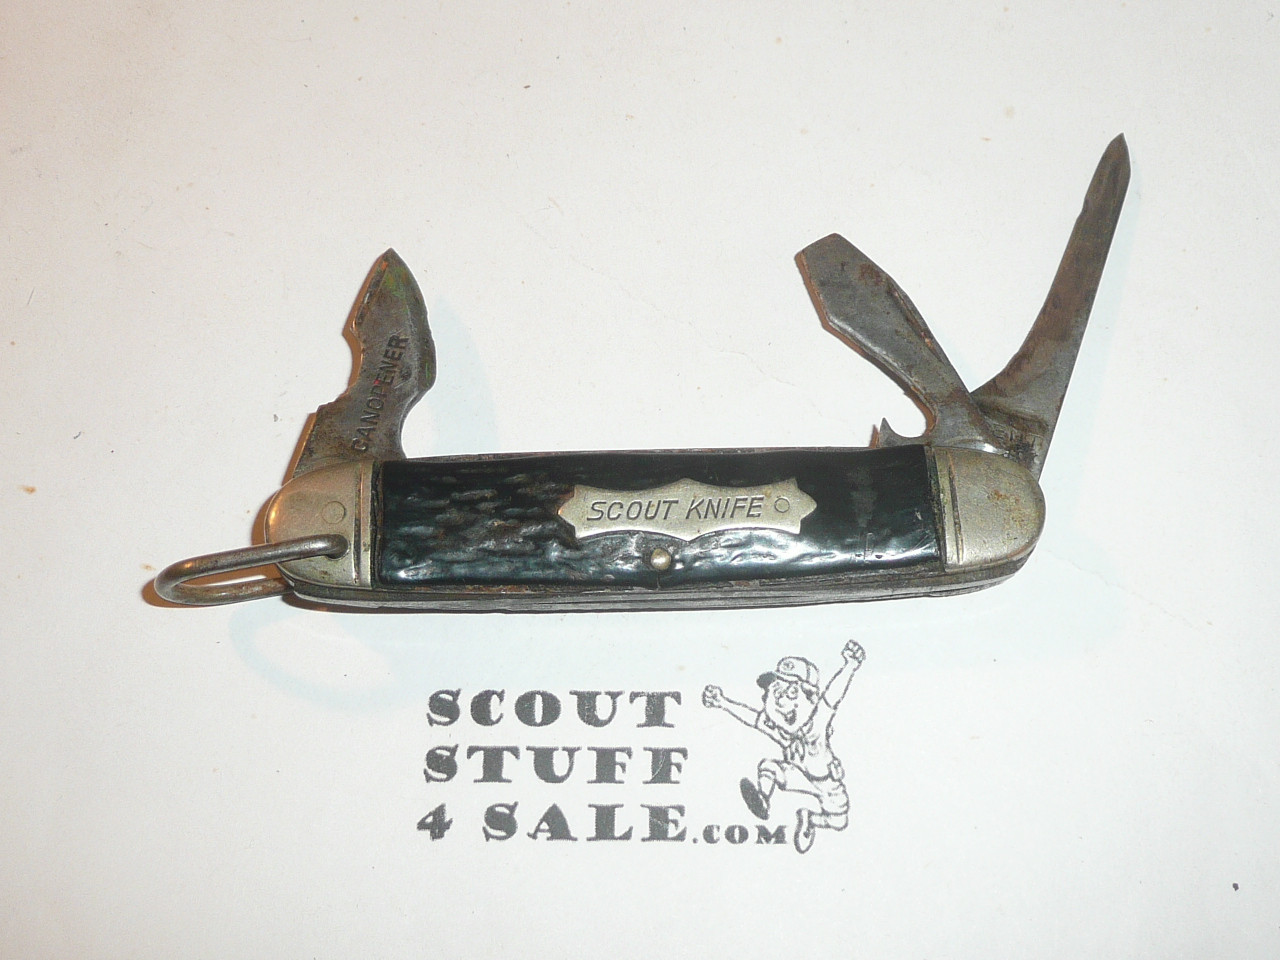 Boy Scout Knife, Kent Manufacturer, used